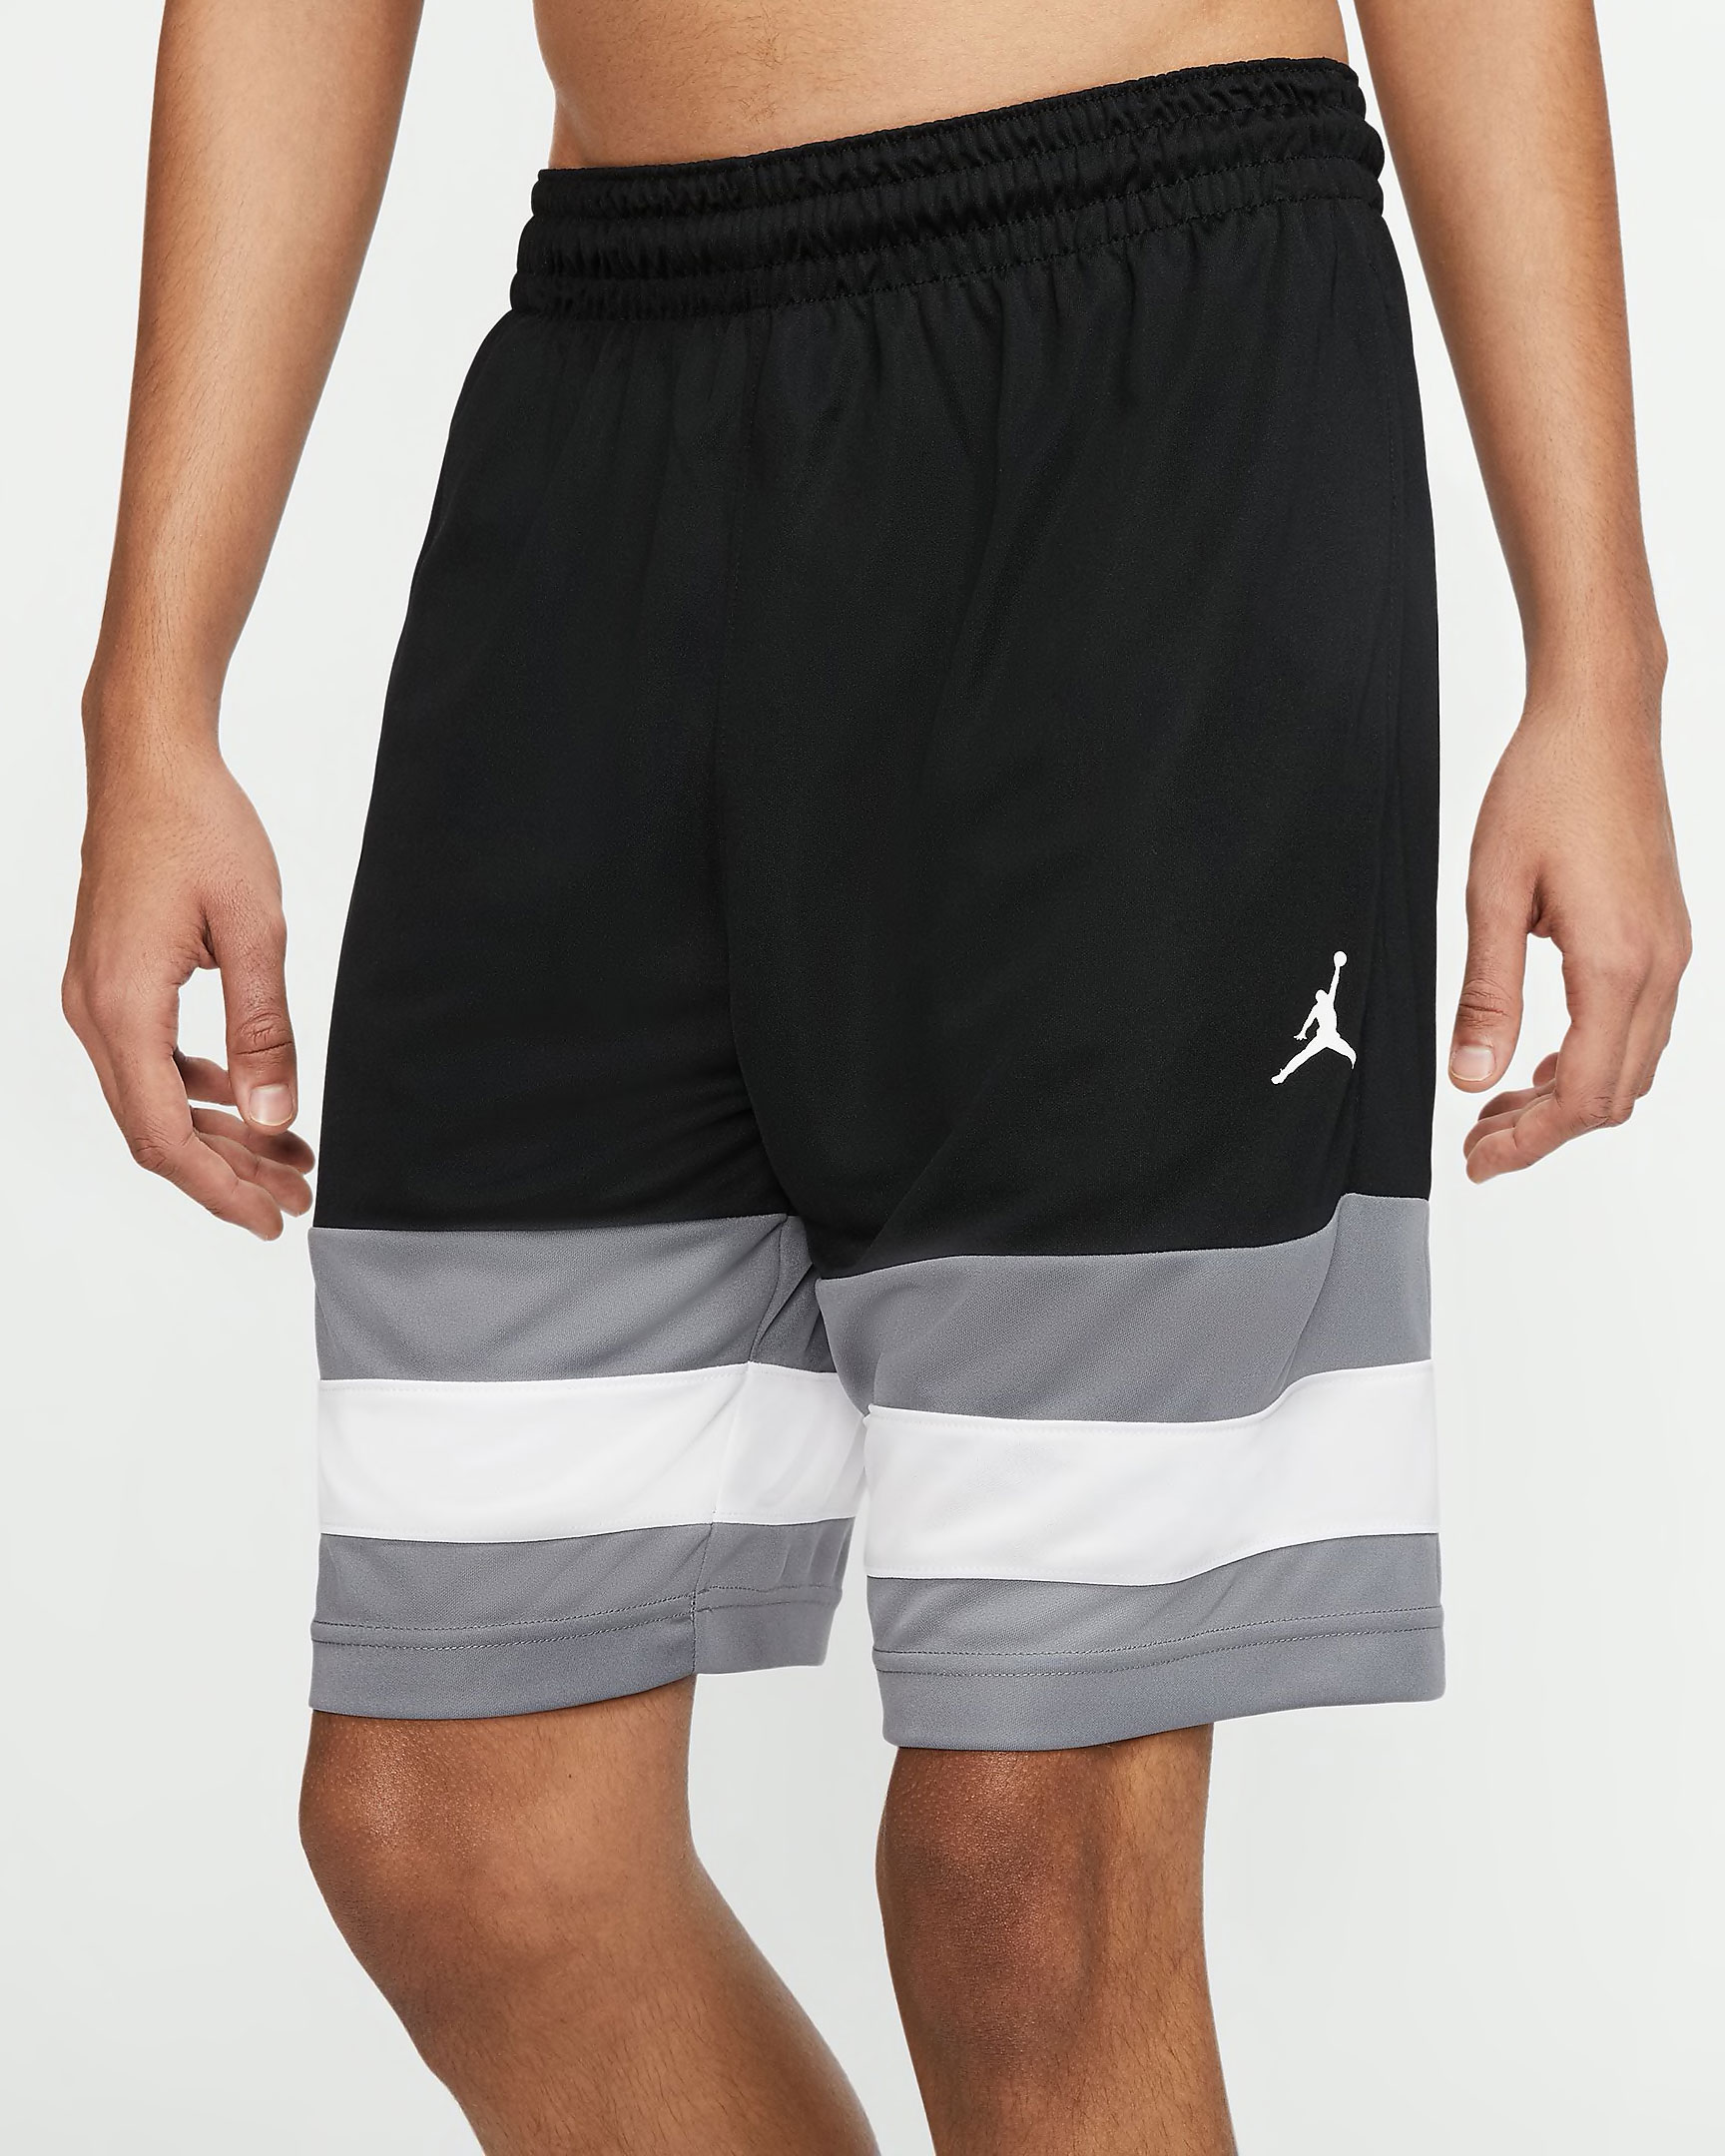 Air Jordan Dub Zero White Cement Clothing | SneakerFits.com